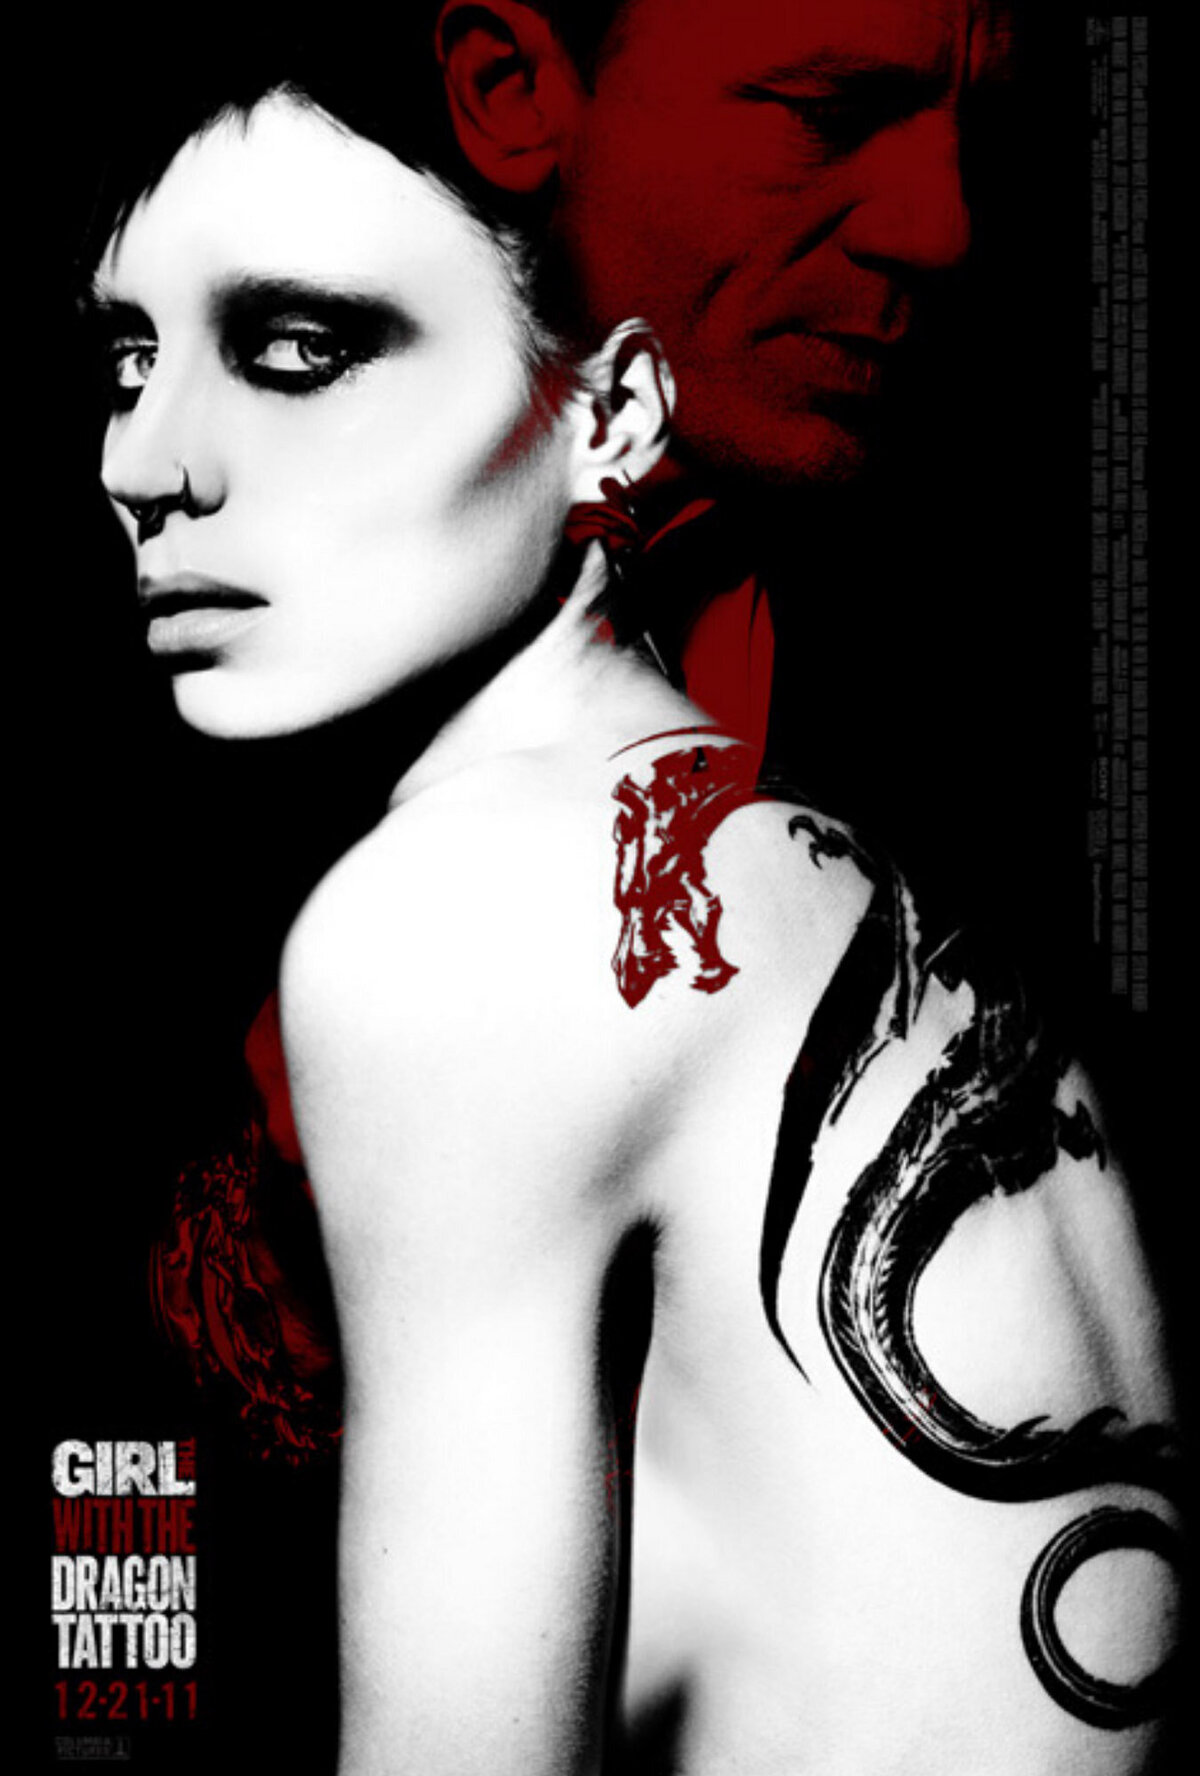 Dragon tattoo 2 Design poster